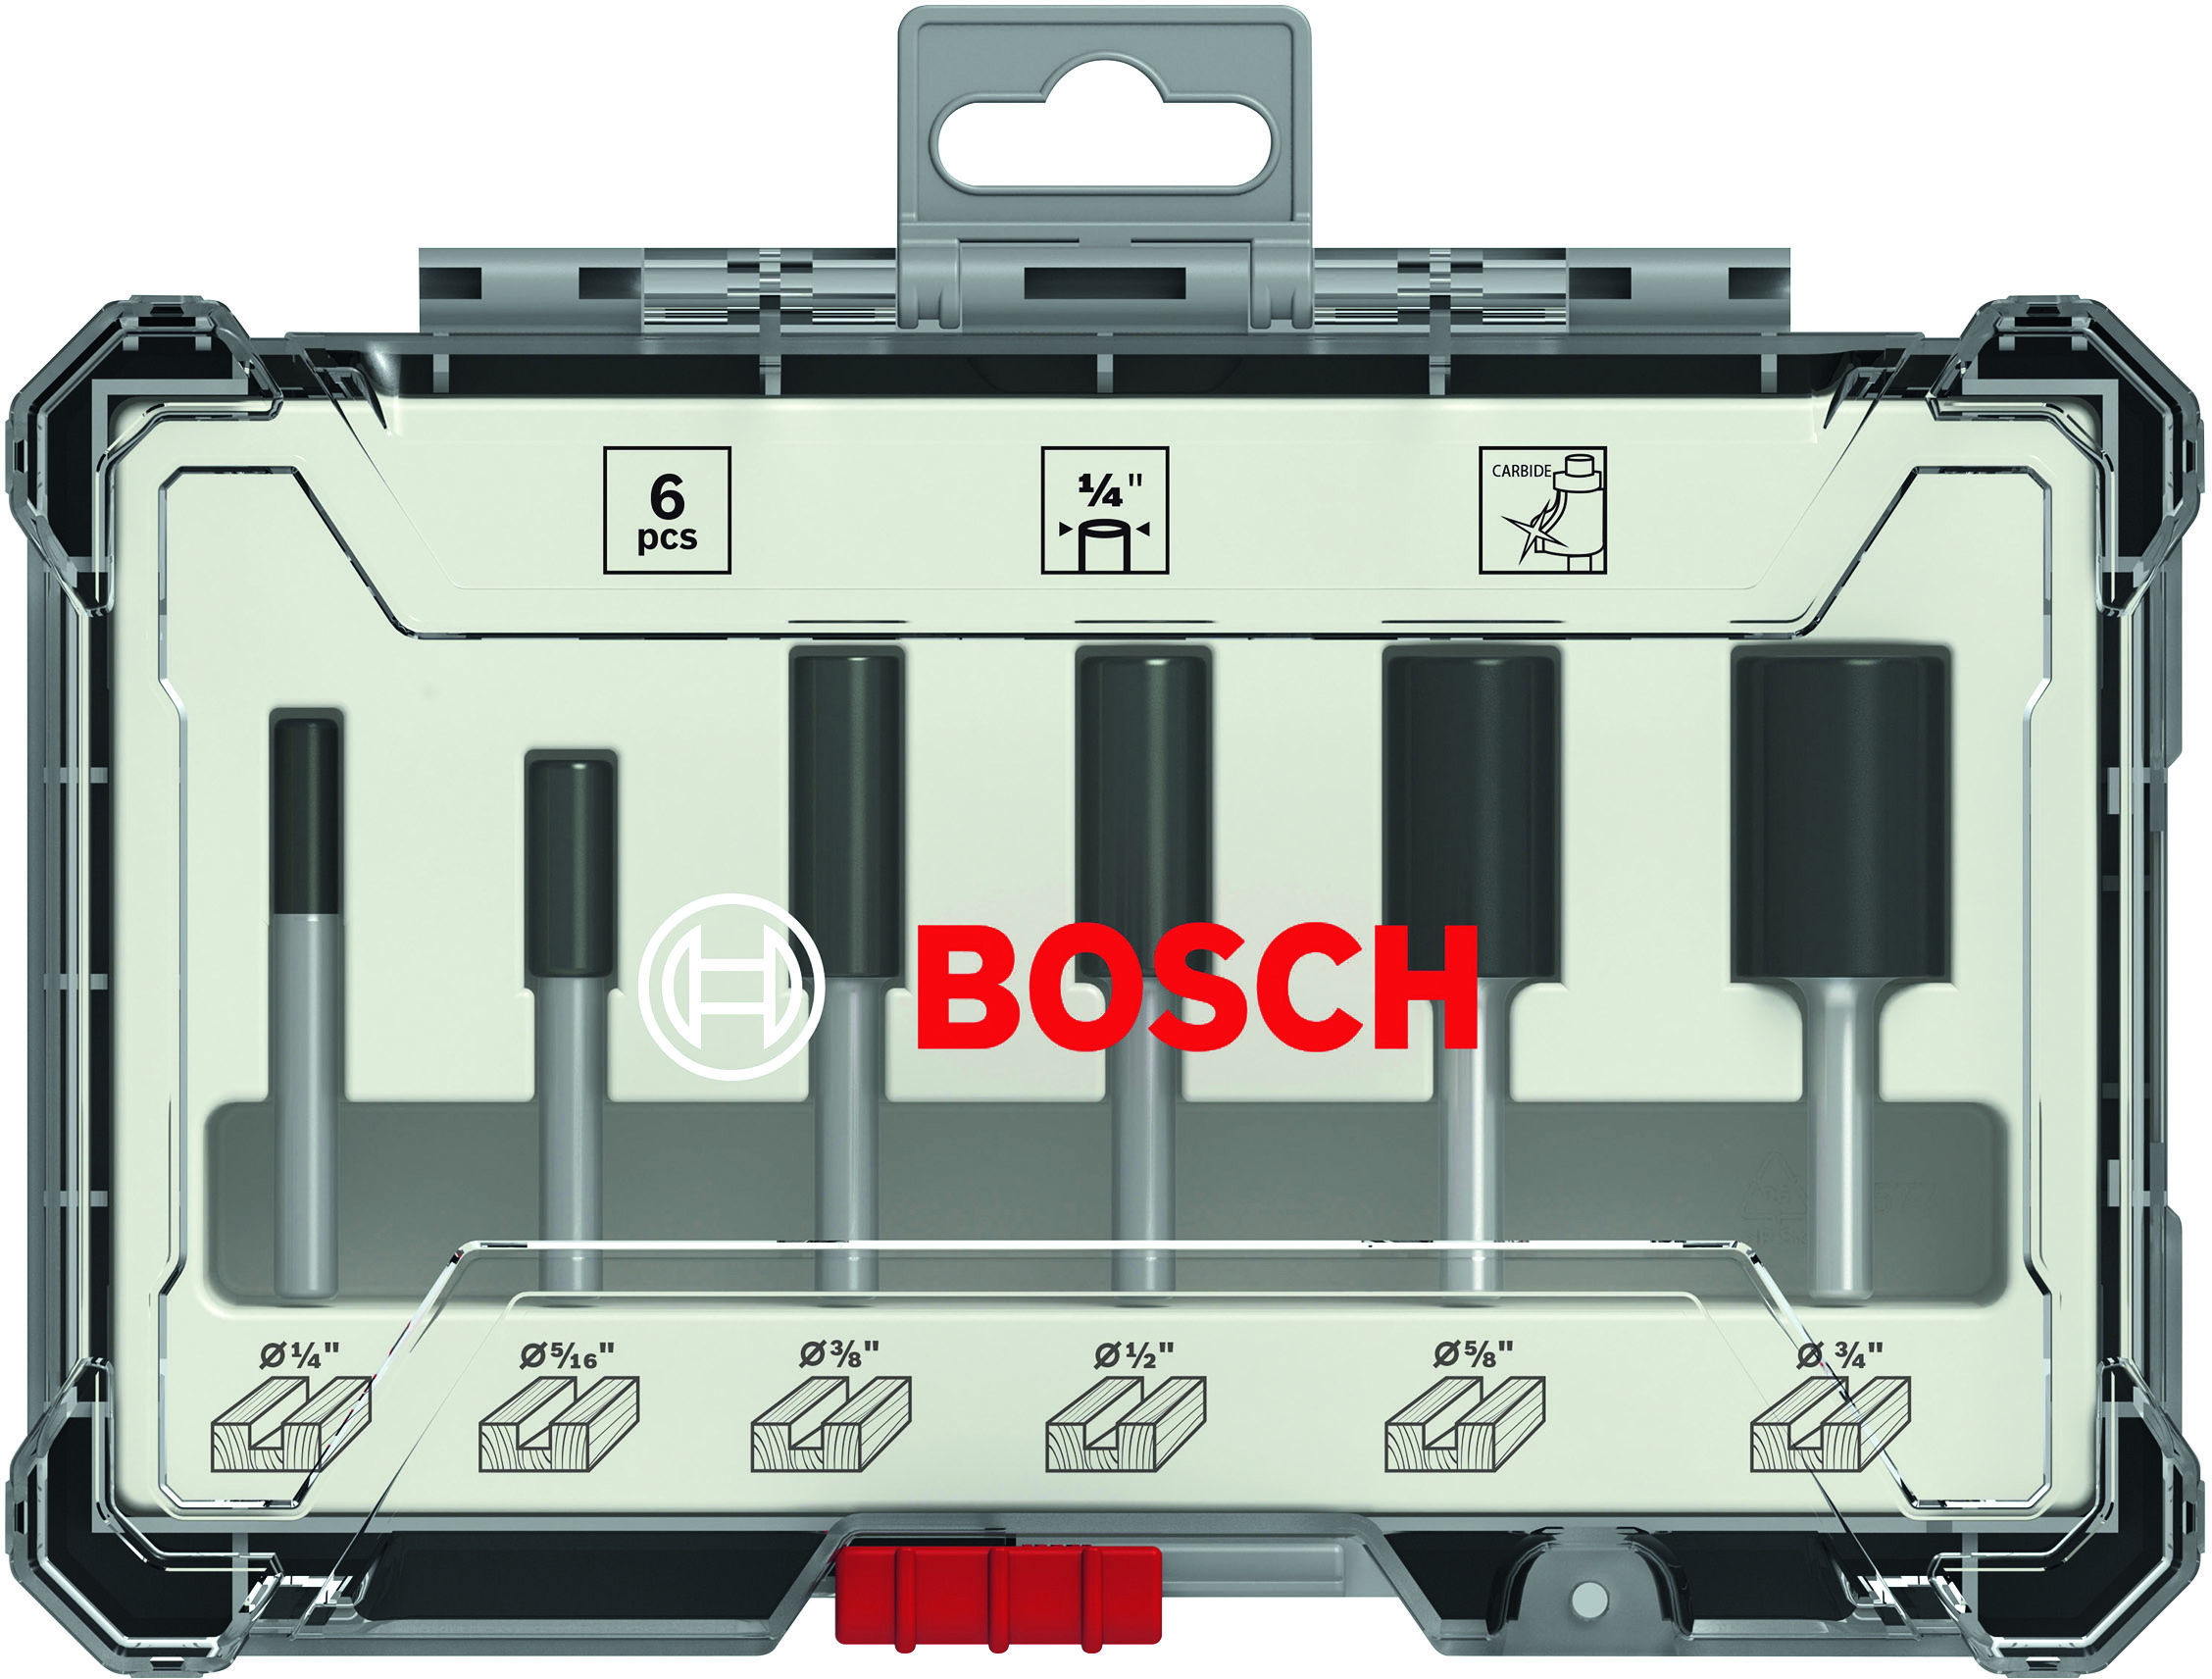 Bosch 1/4" Straight Router Bit Set (6pcs)